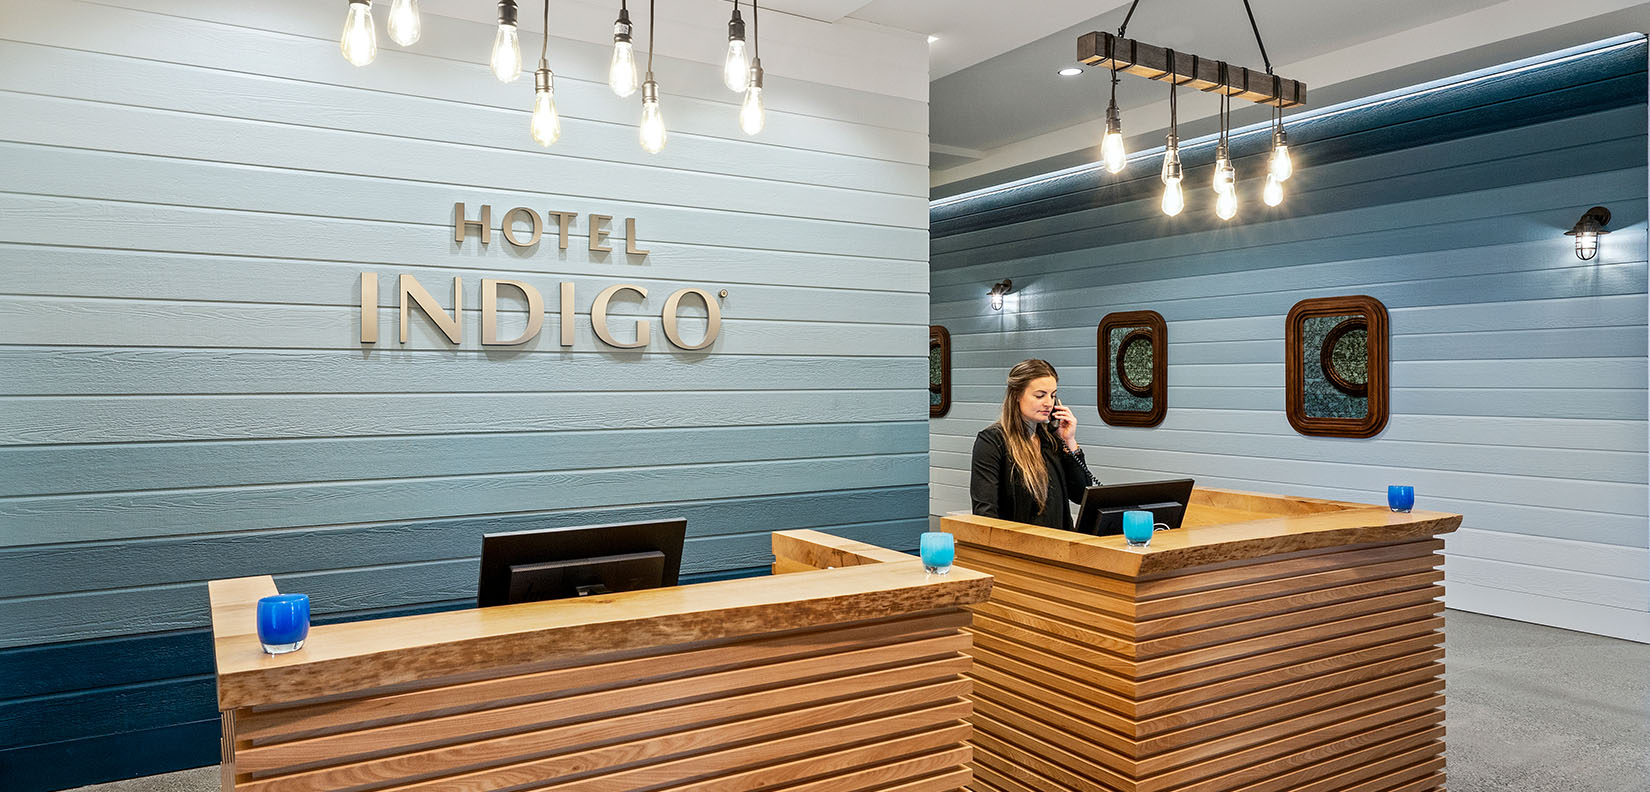 Hotel Indigo front desk